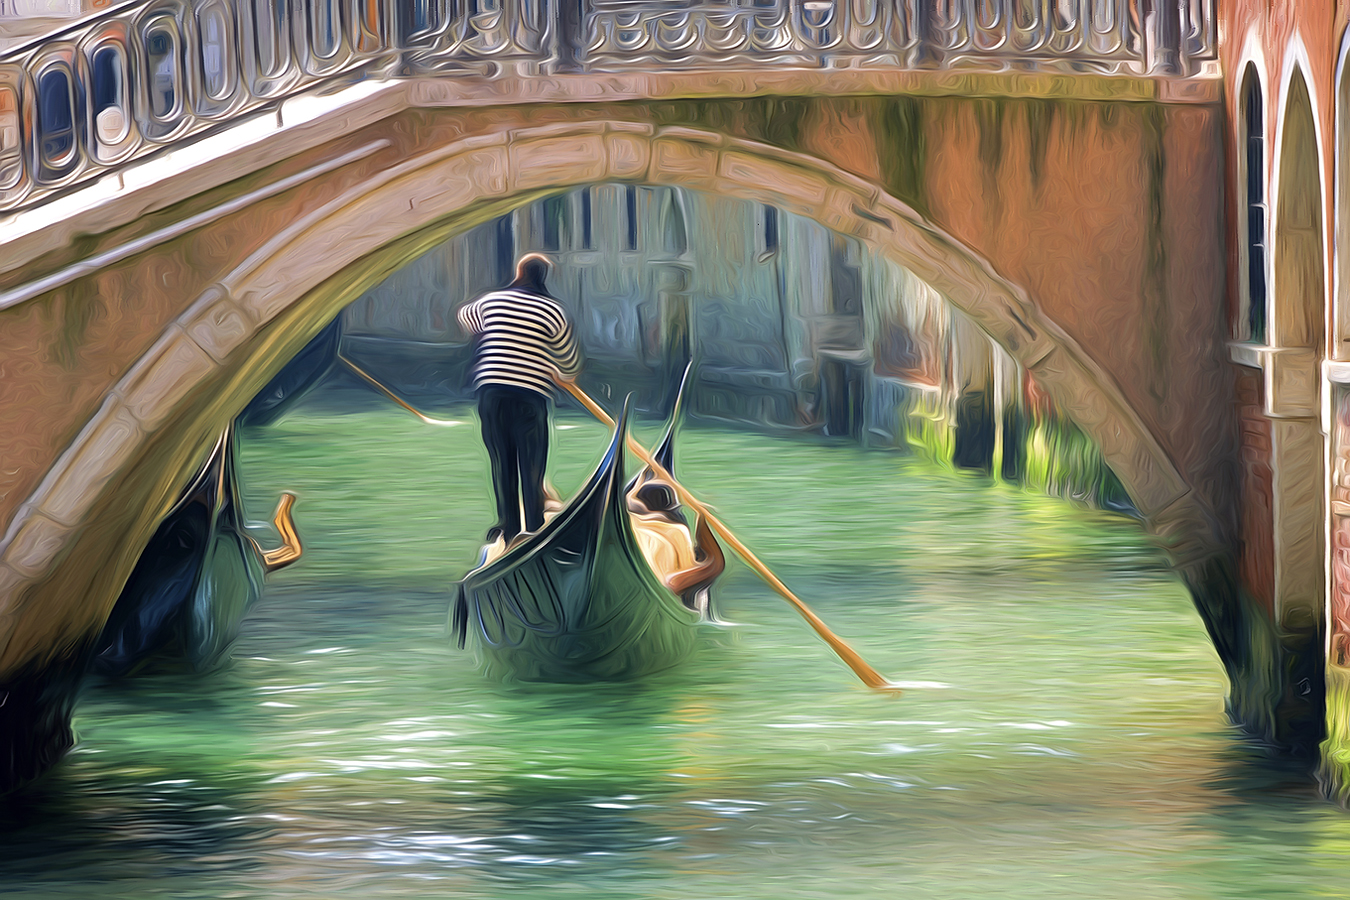 Venedig-Gondeln-Bruecke-Kanal-venezianische-Fotokunst-Fotomalerei-DXO1I8588a.jpg